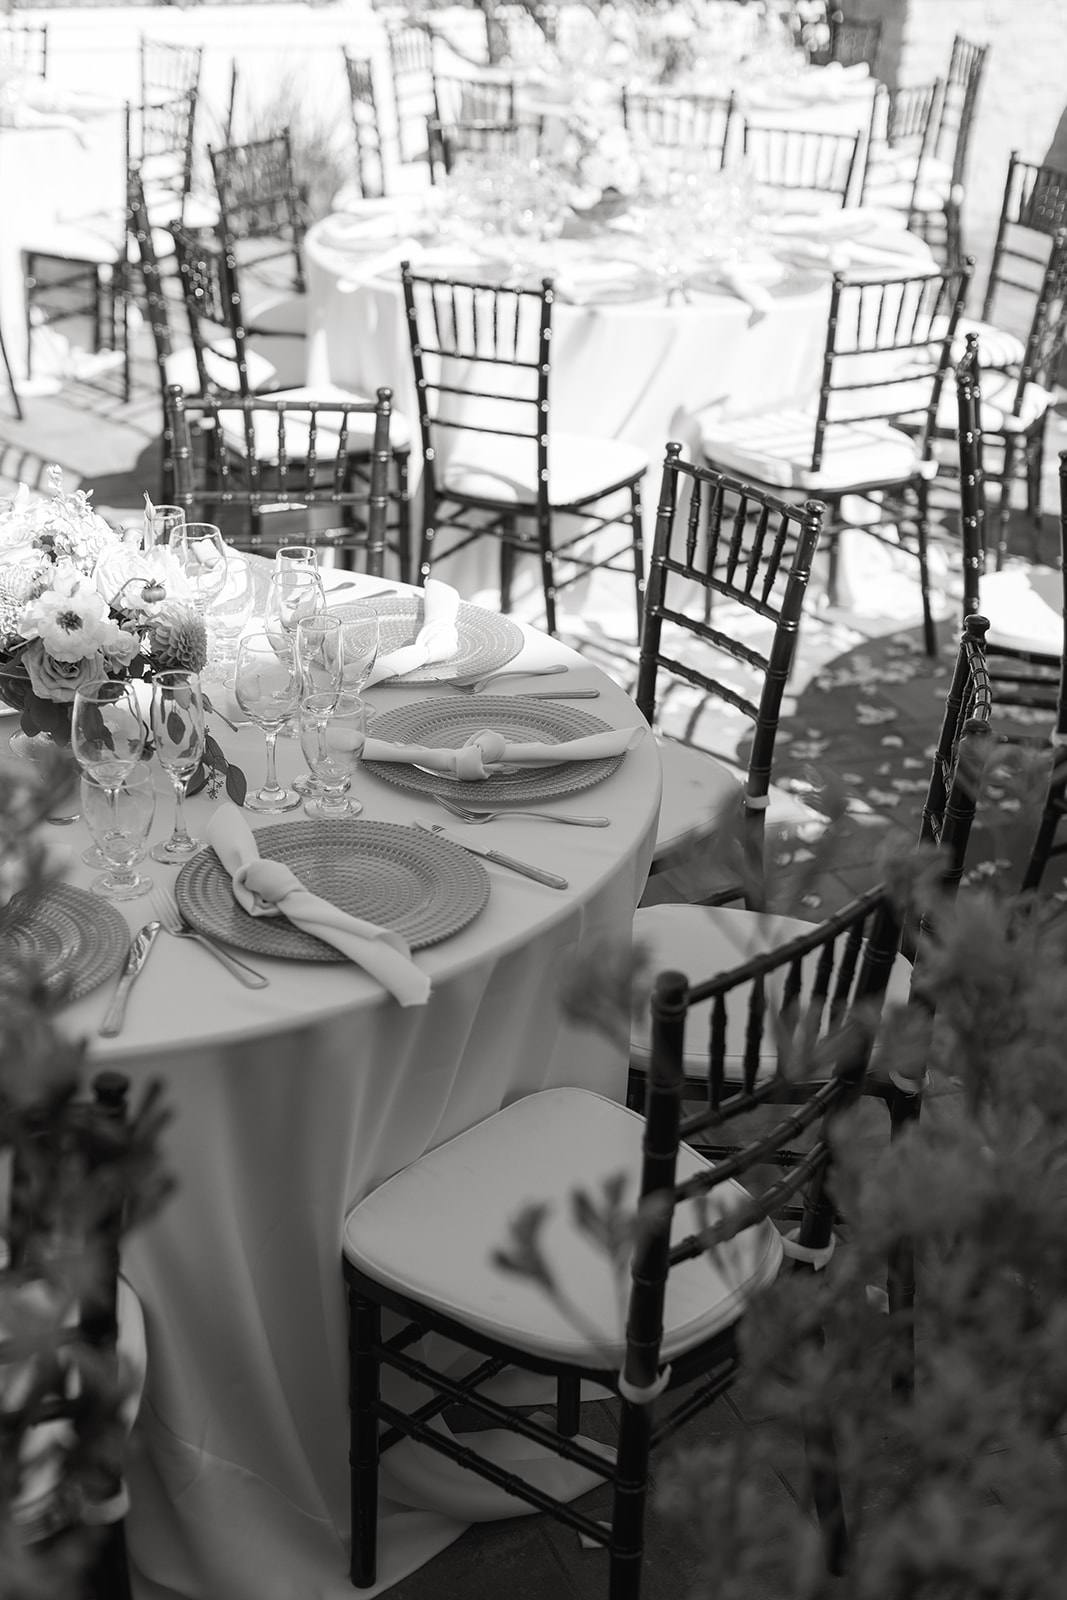 the perry house wedding monterey california outdoor reception ceremony venue table decor ideas flower centerpiece